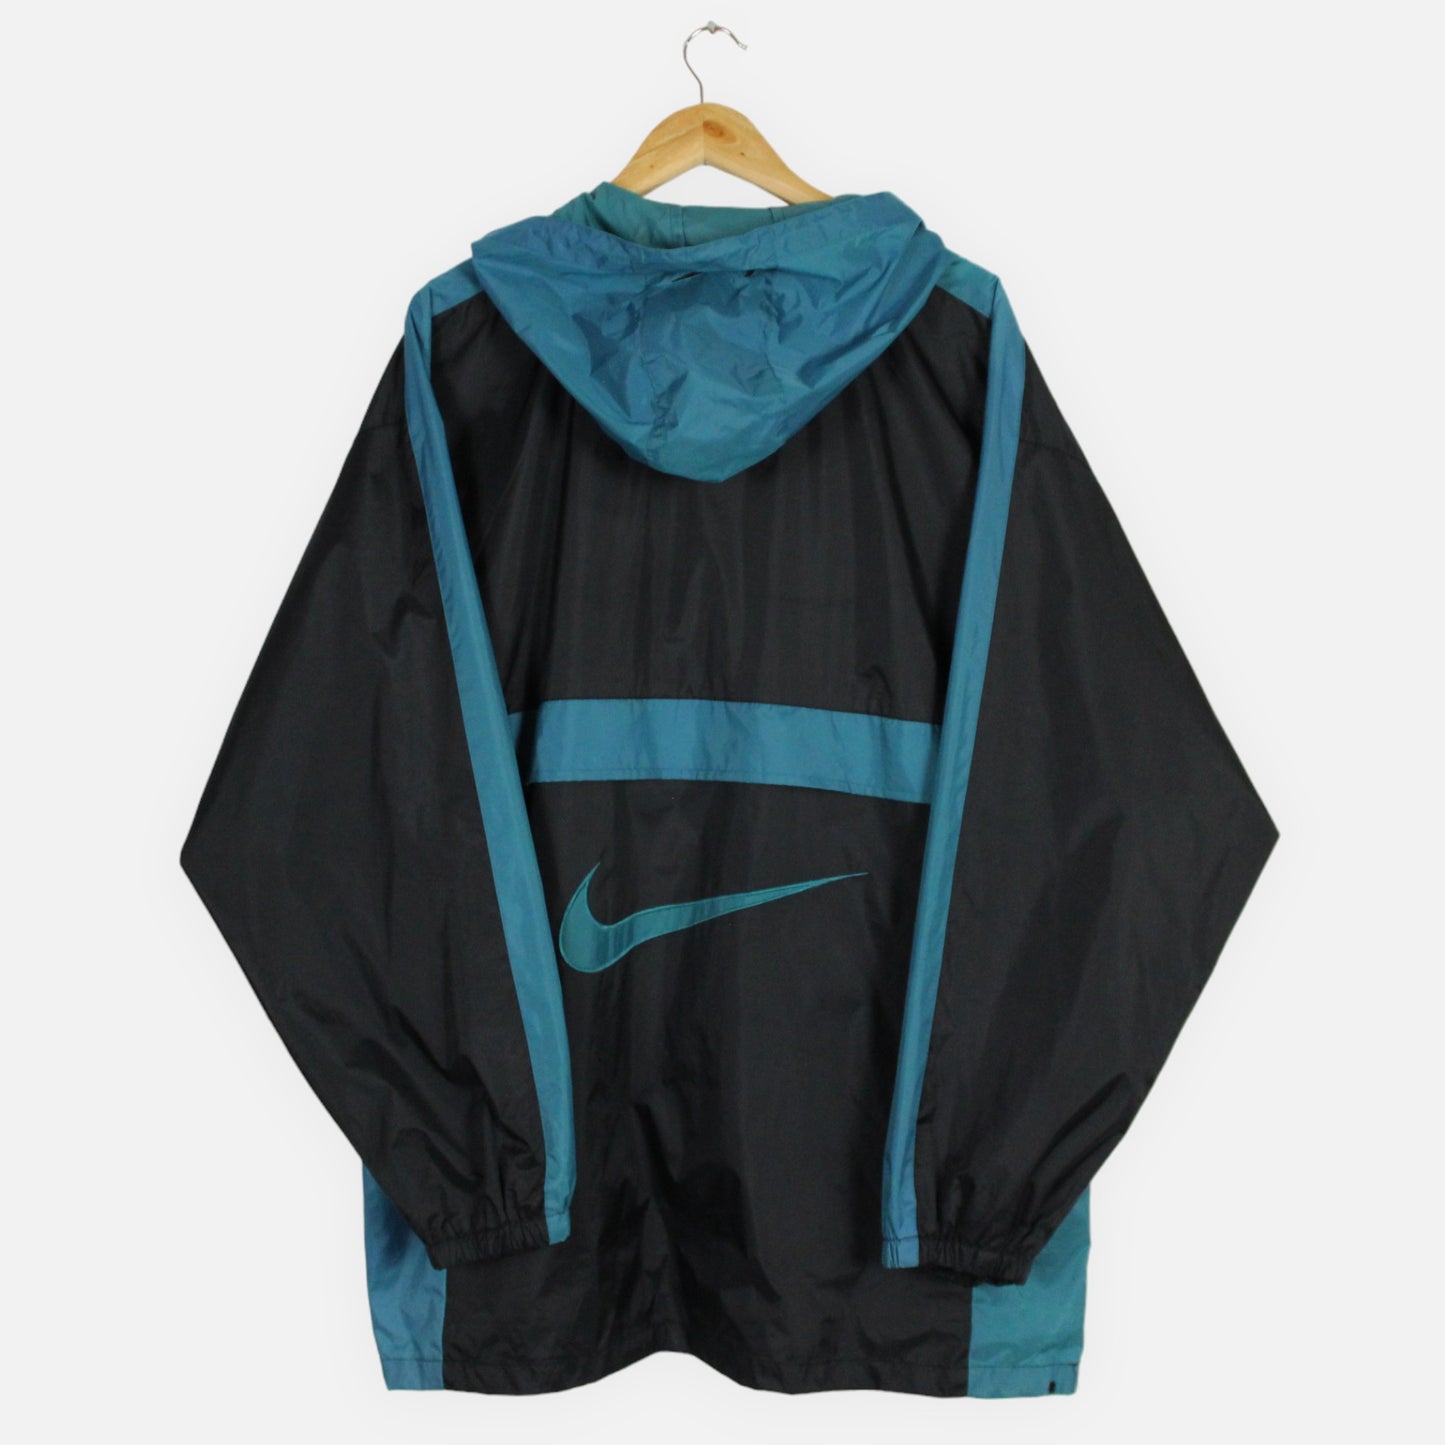 Vintage Nike ACG Anorak Jacket - XL